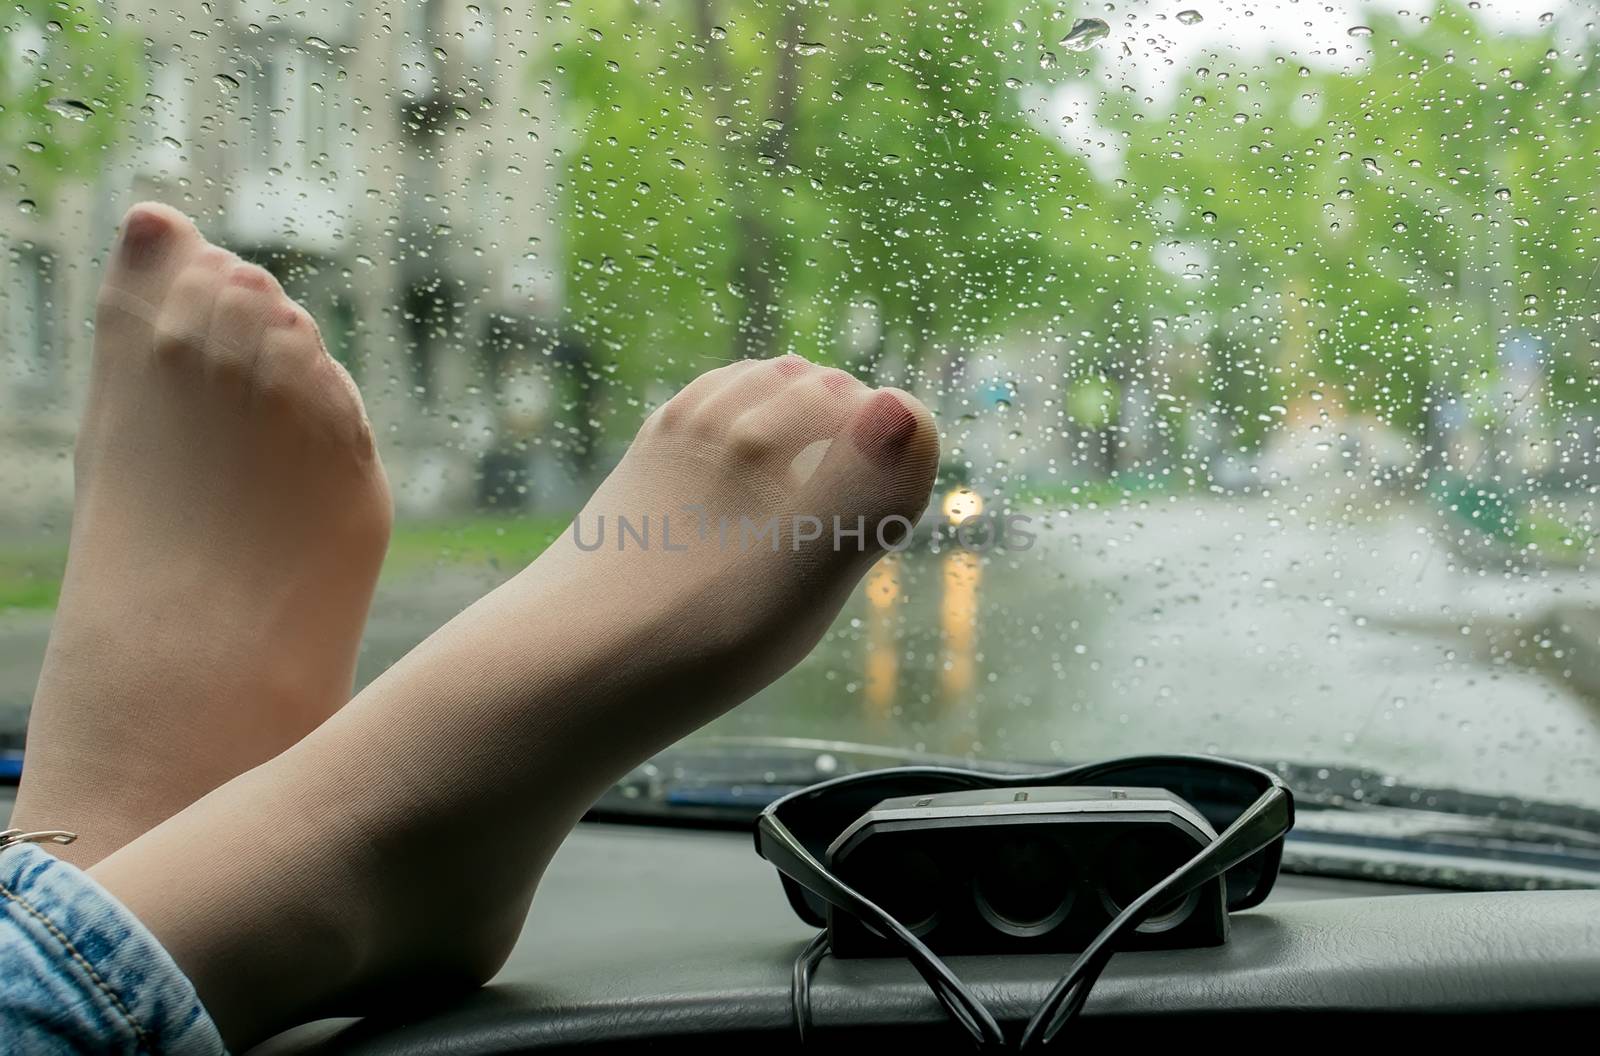 women feet lie on the car panel by jk3030